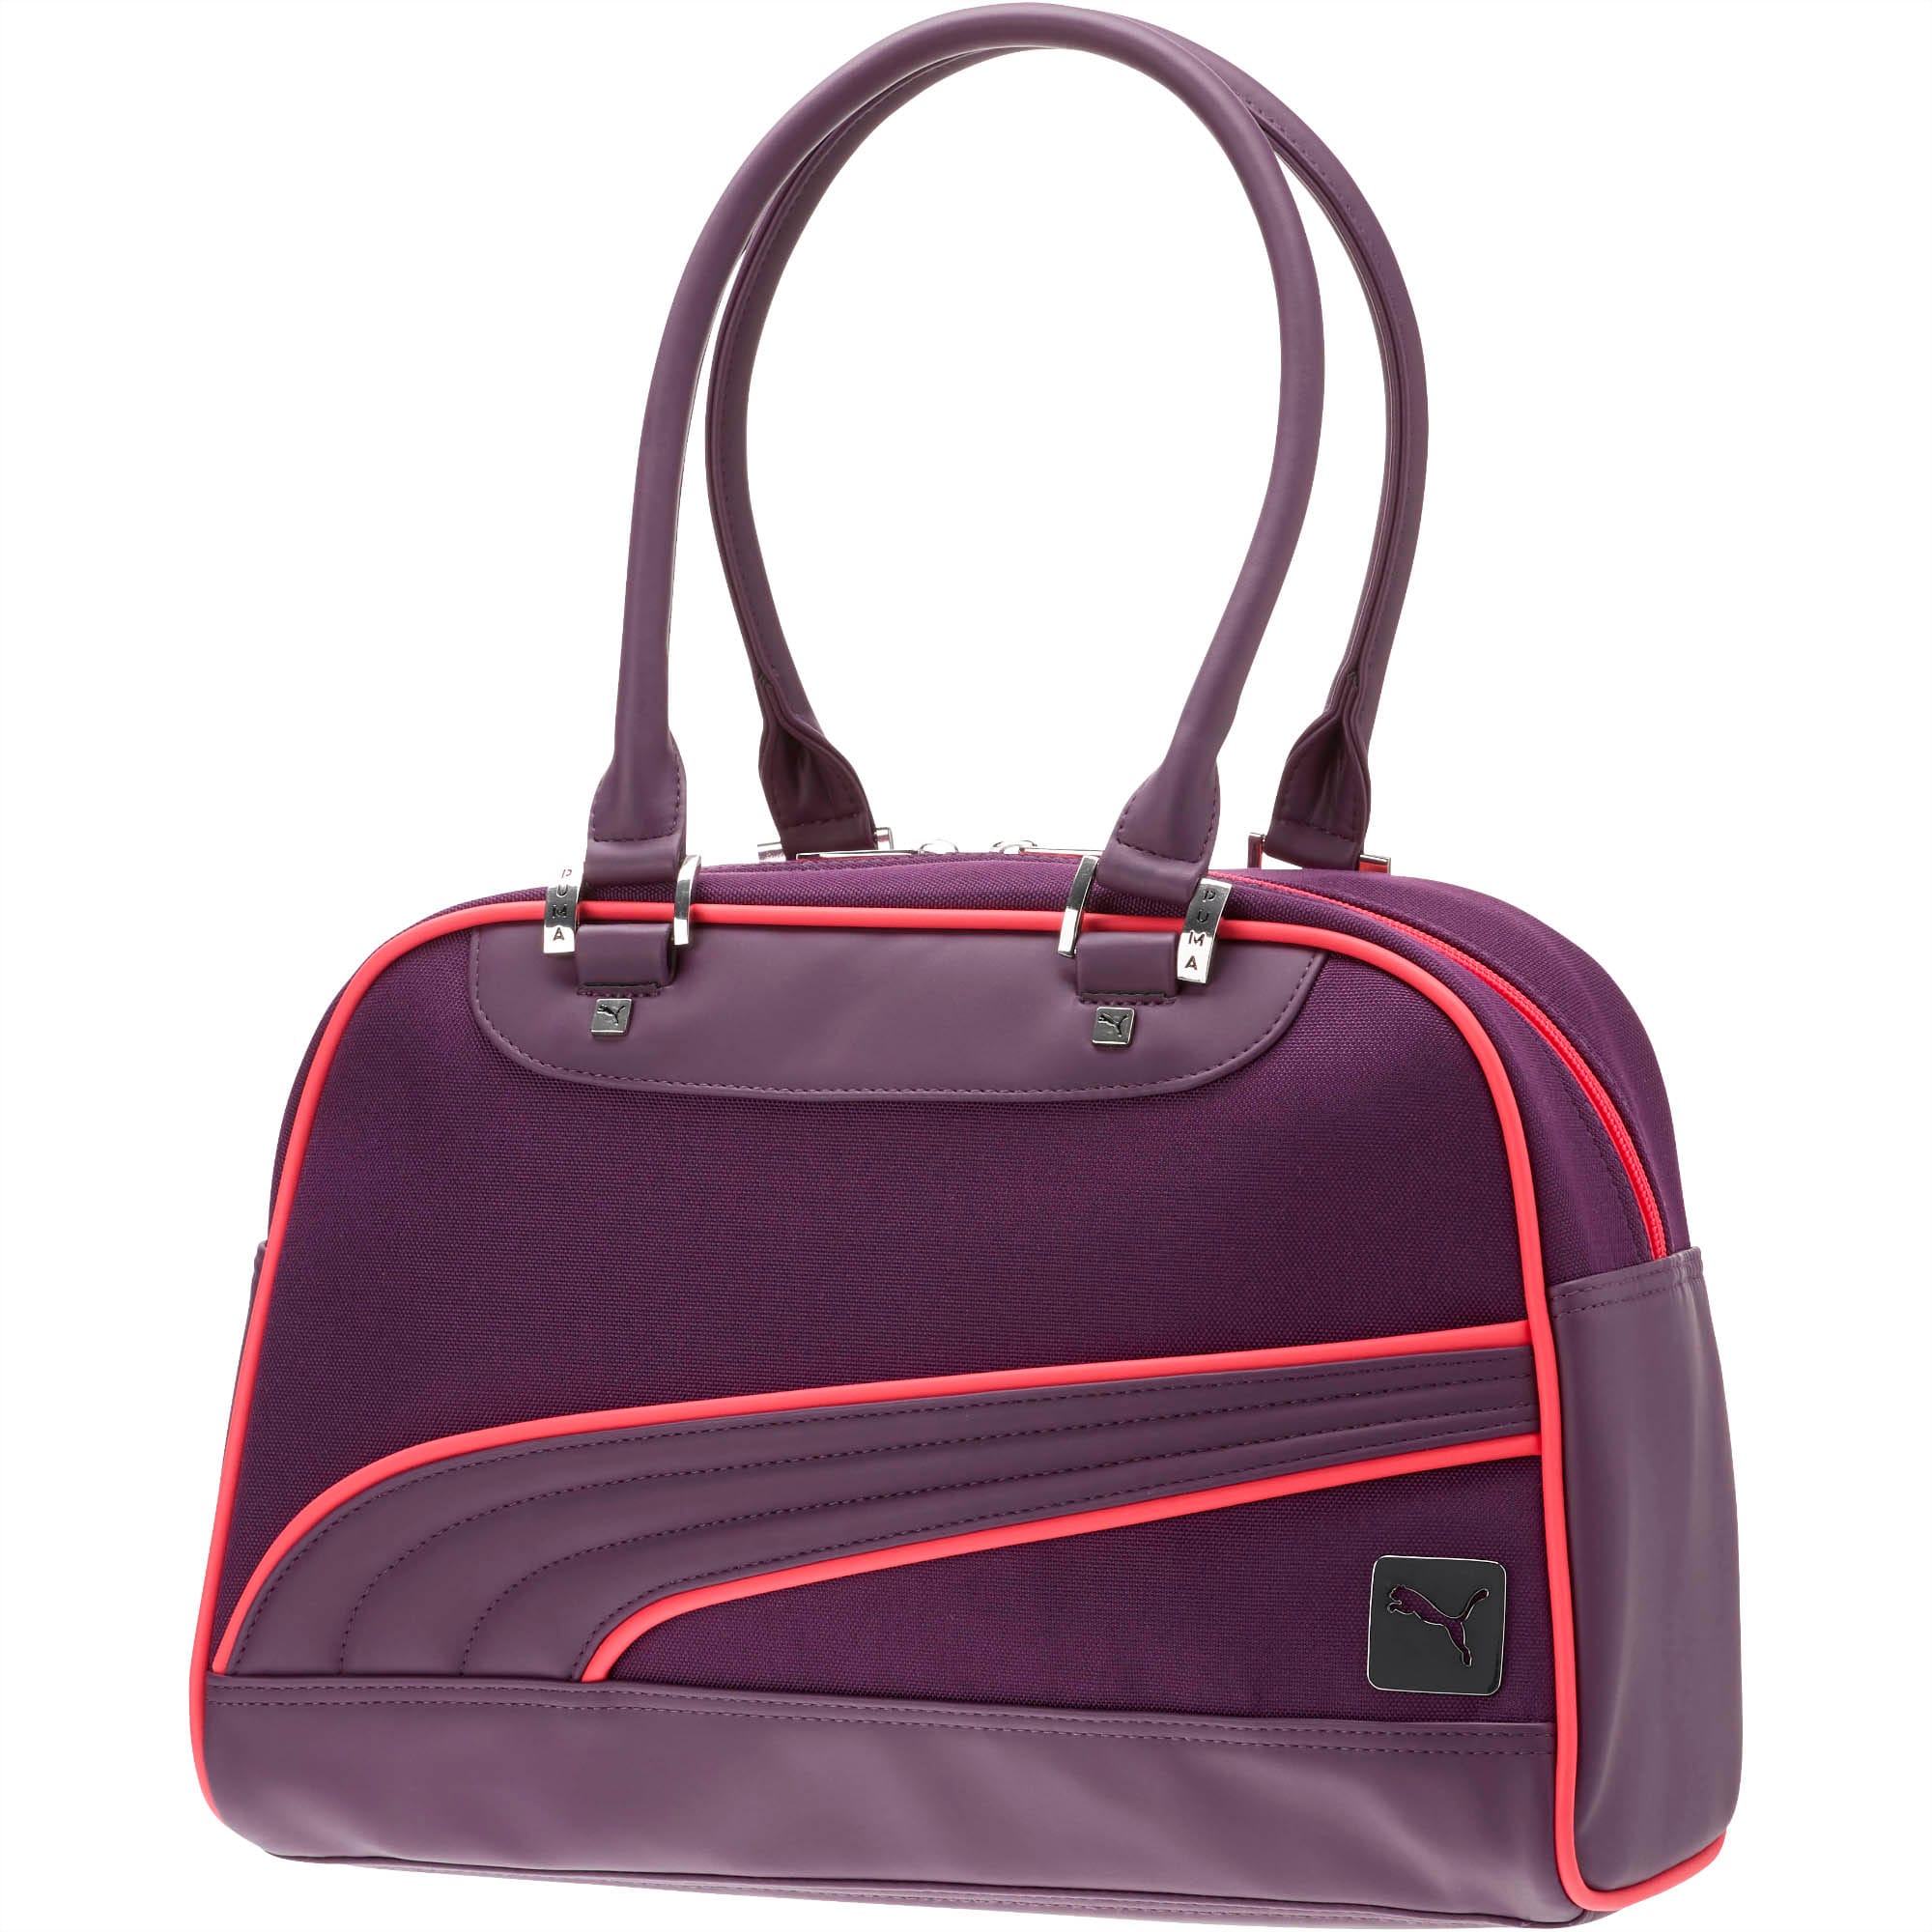 puma shoulder bag purple